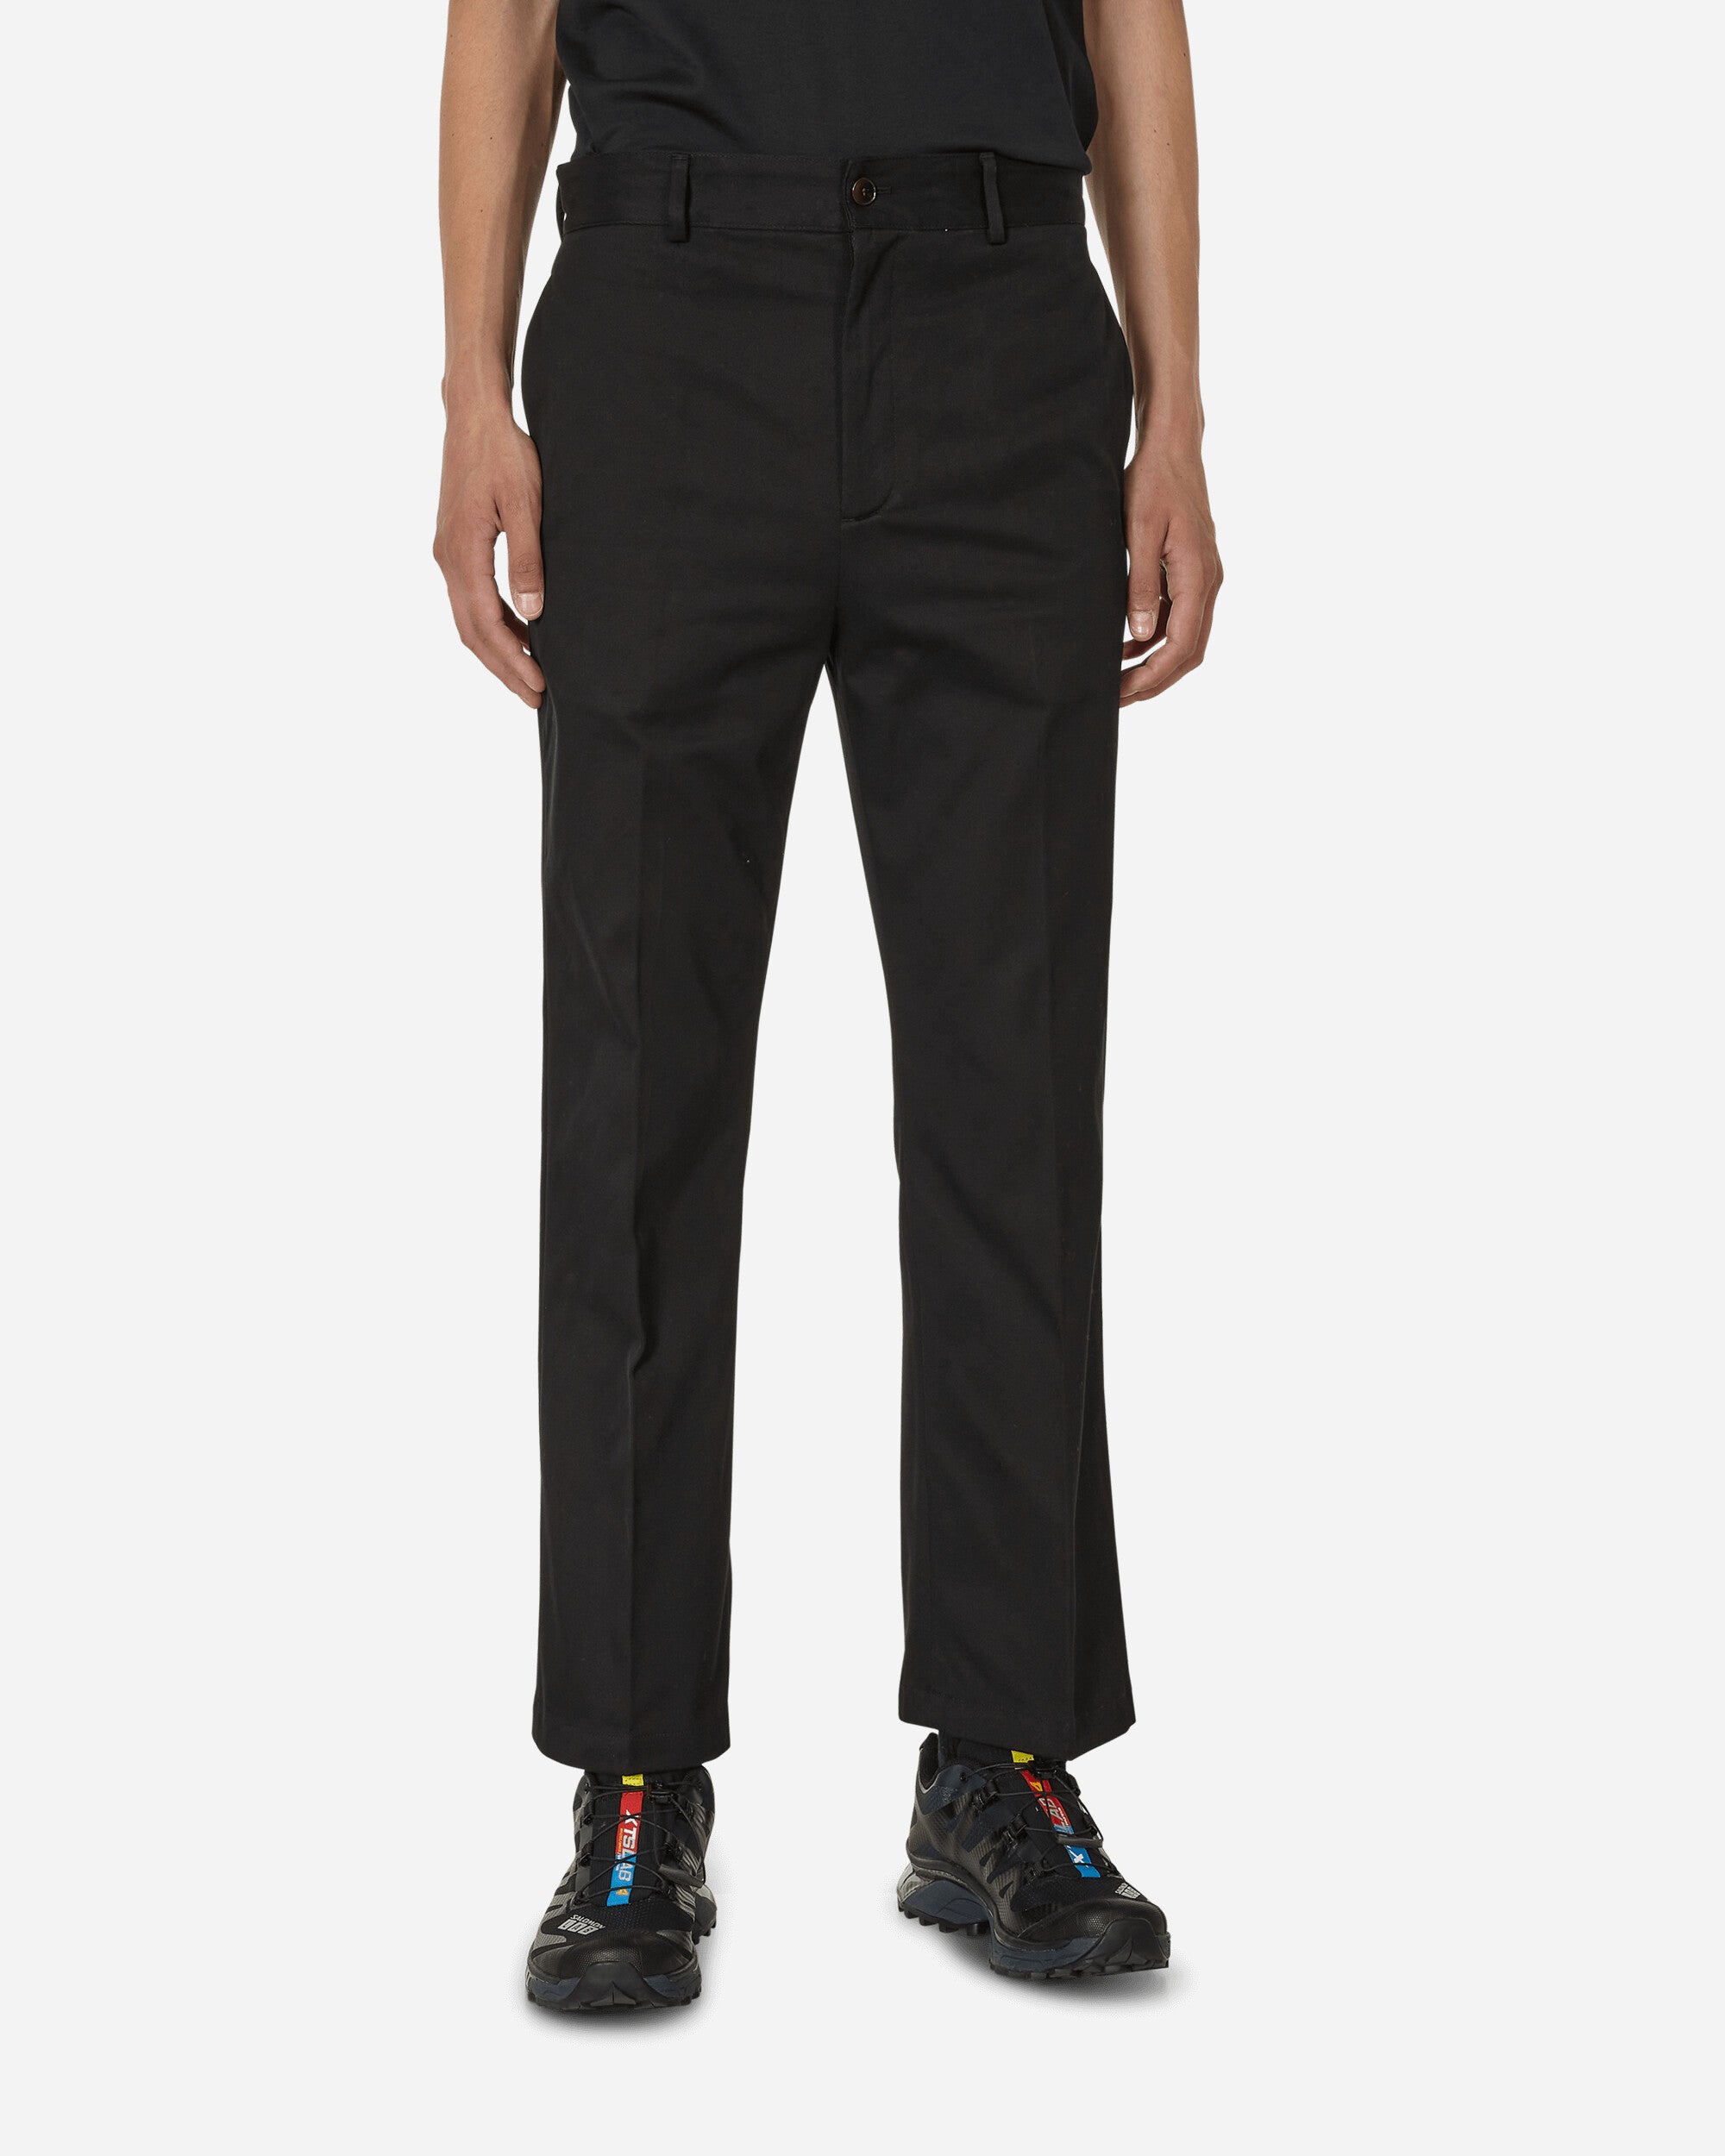 Topman skinny stacker twill pants with zip hem in black | ASOS